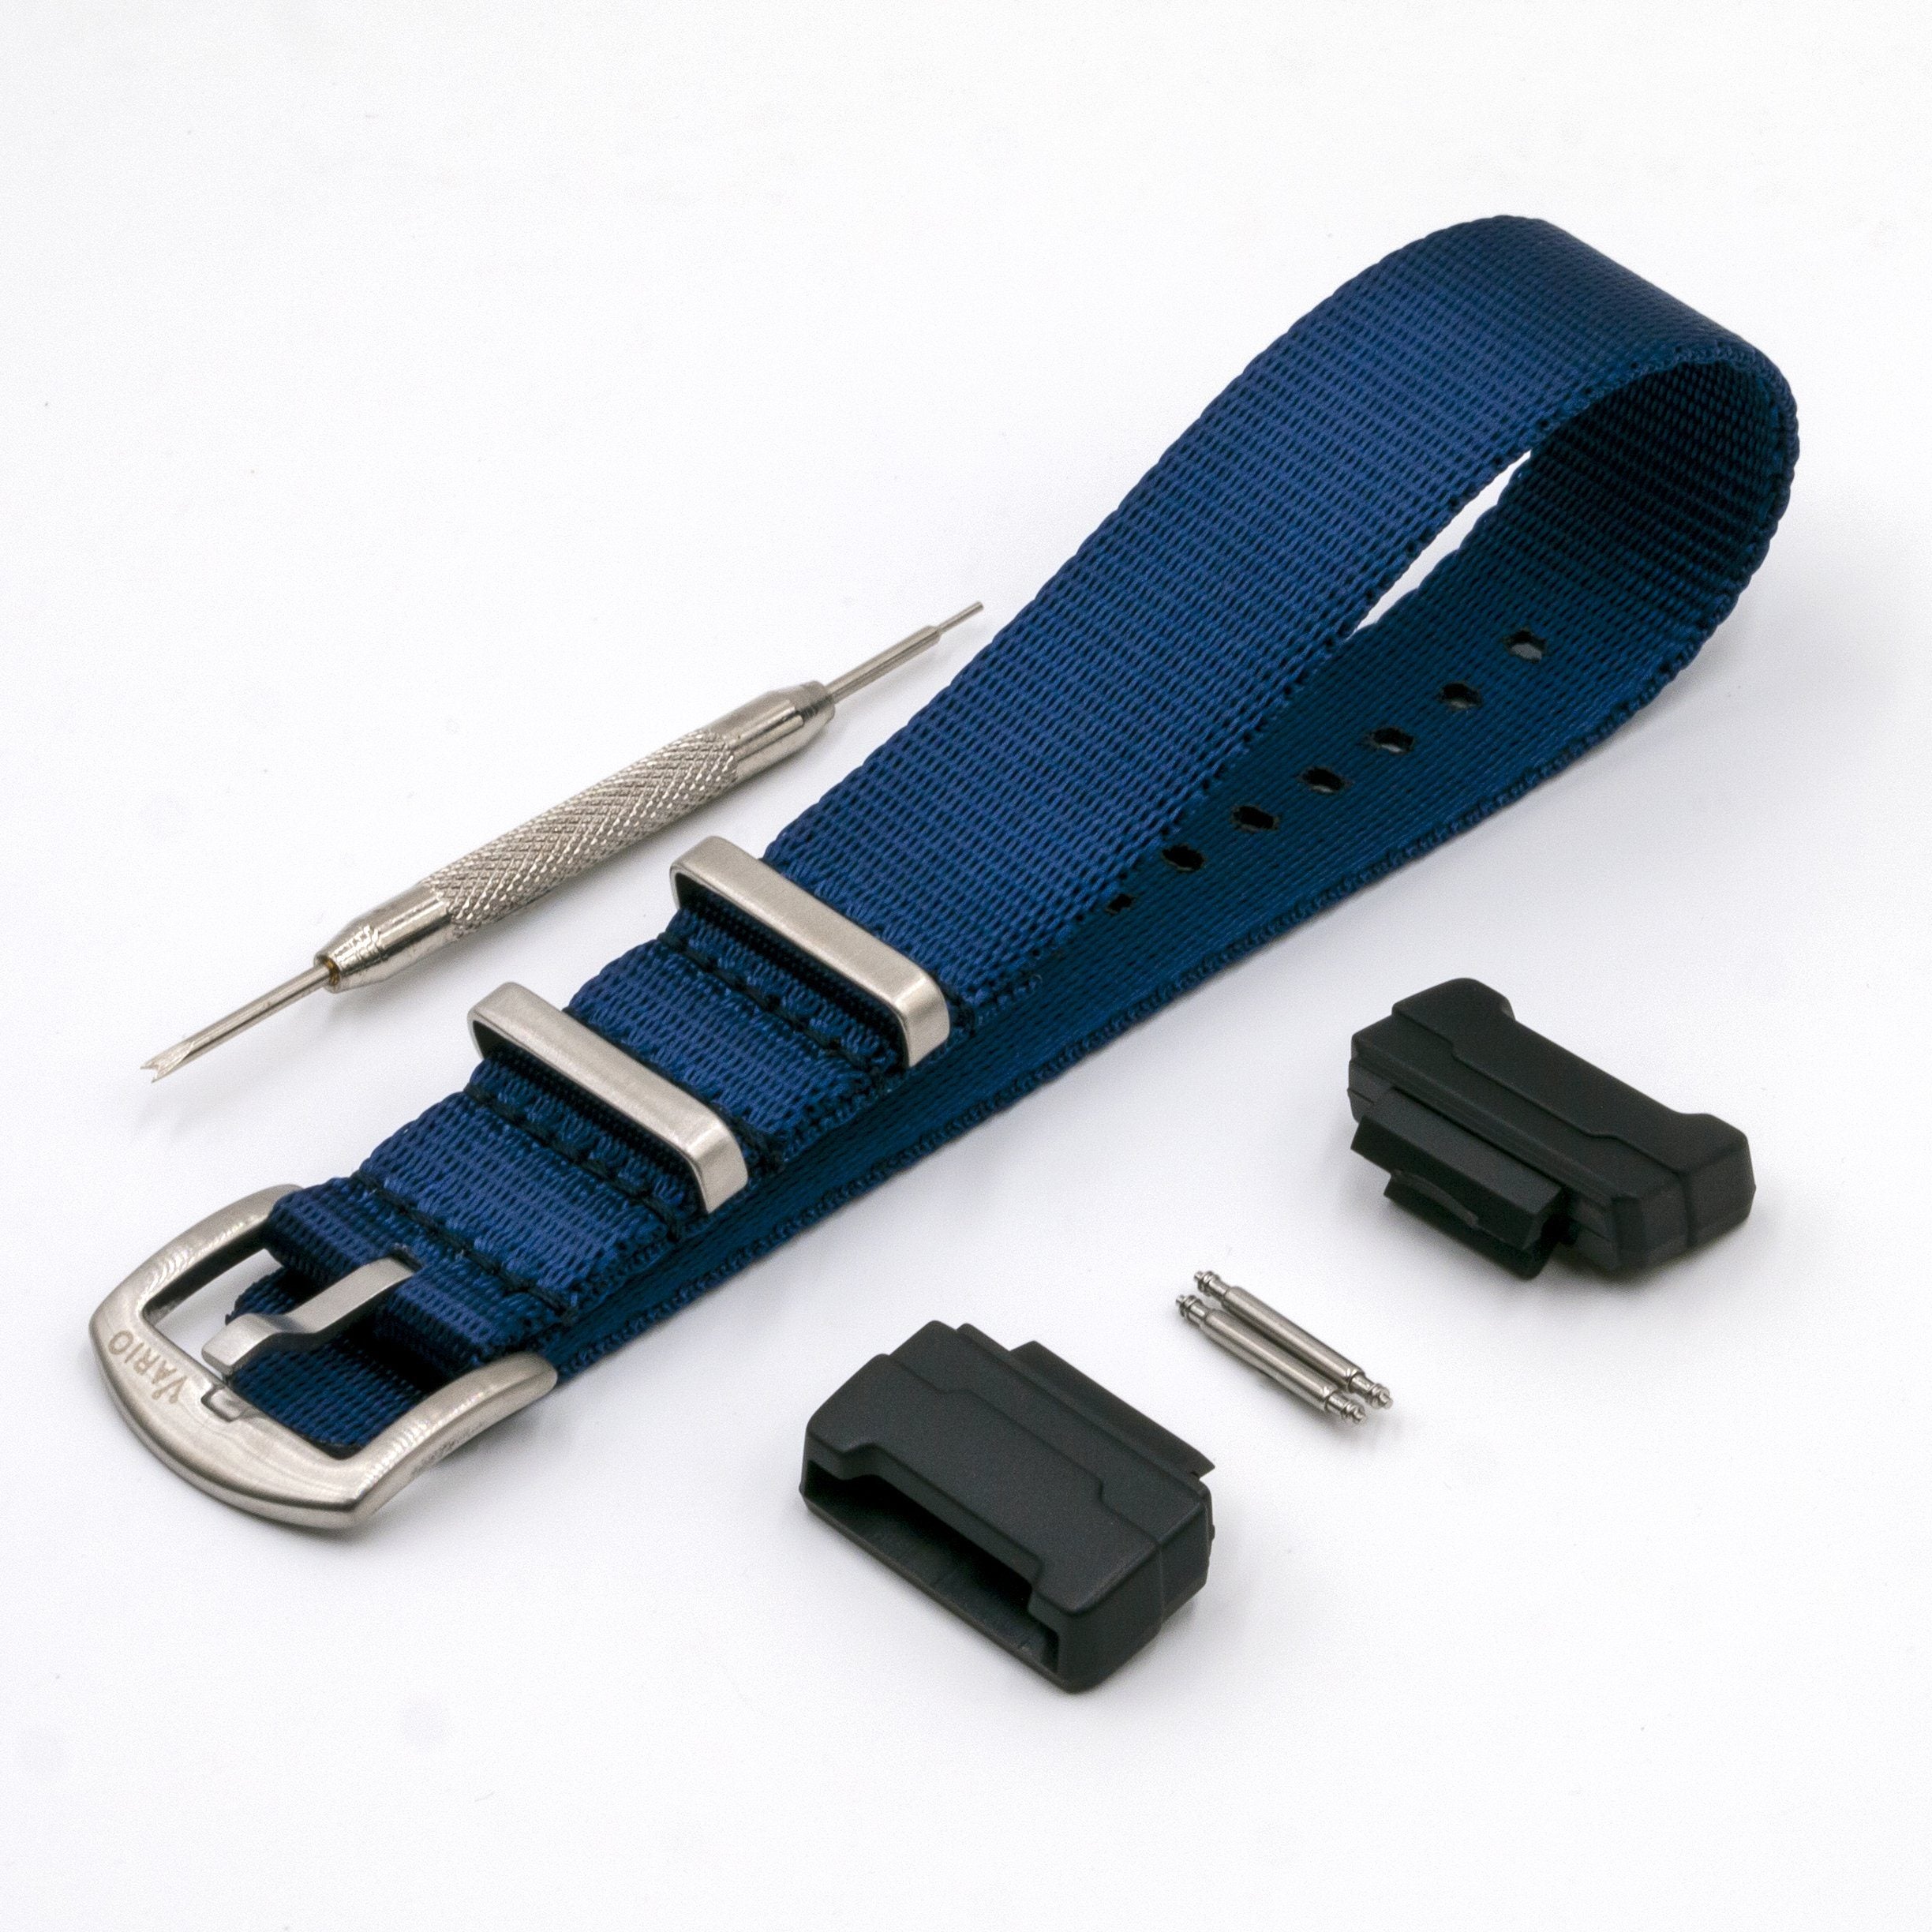 vario gshock seat belt adapter kit navy blue